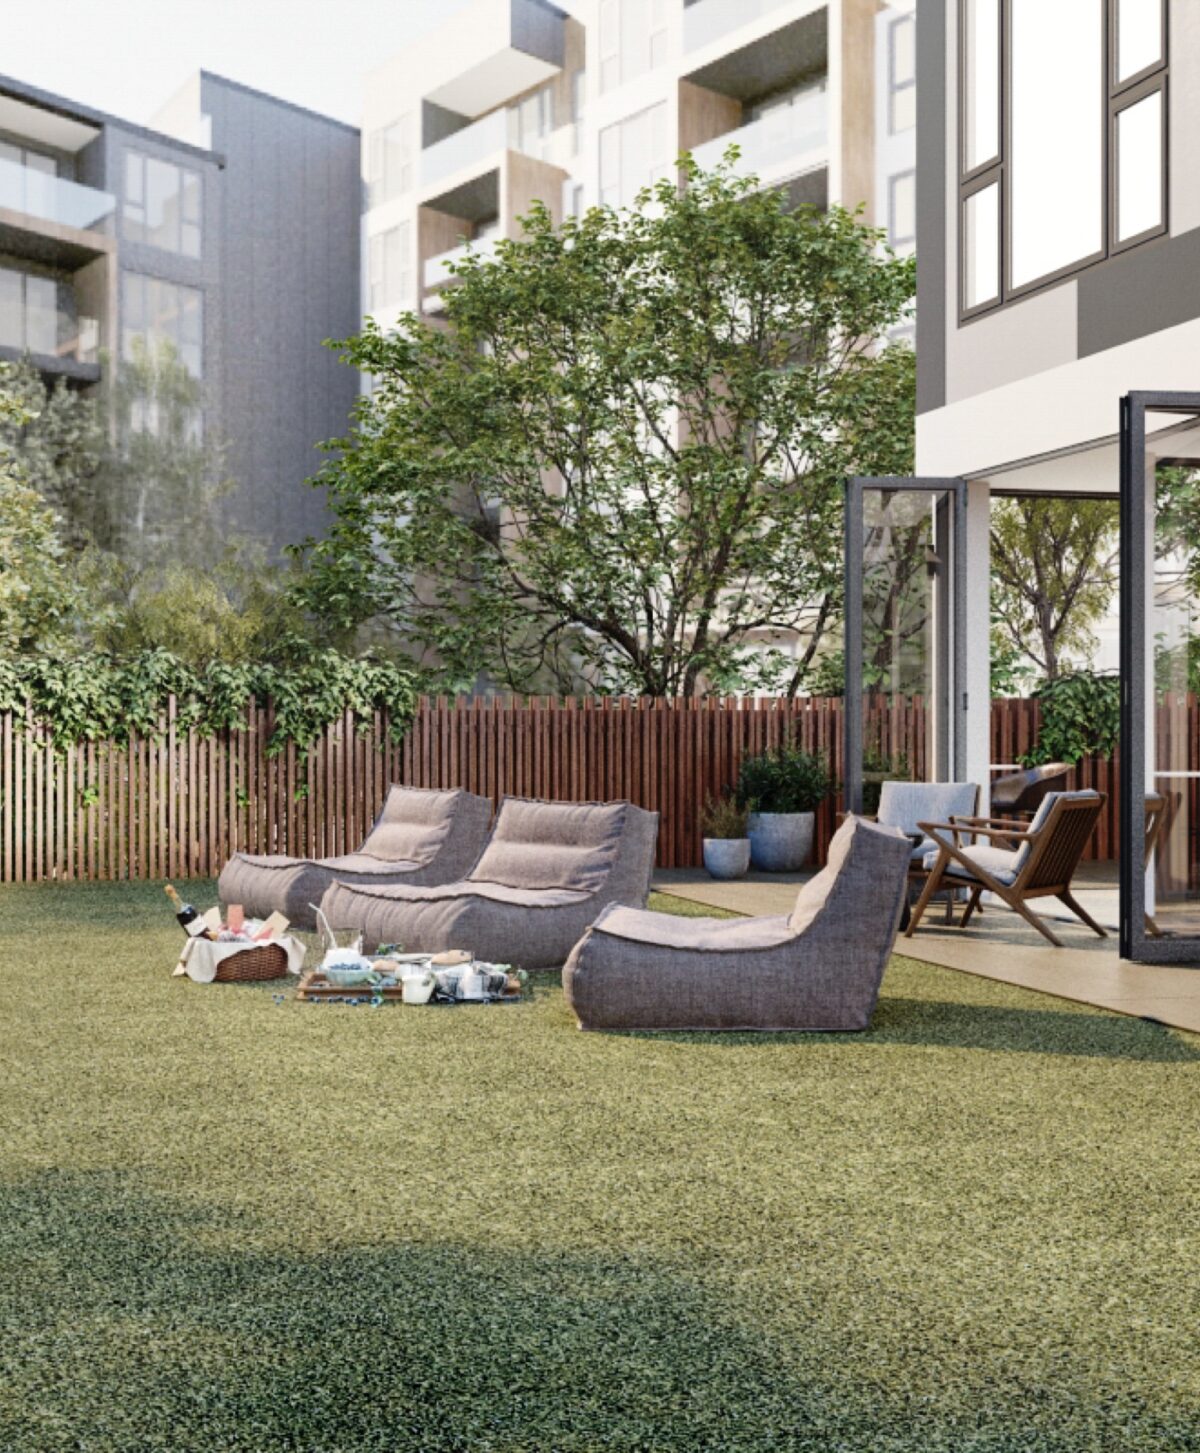 Elevation apartments - garden area